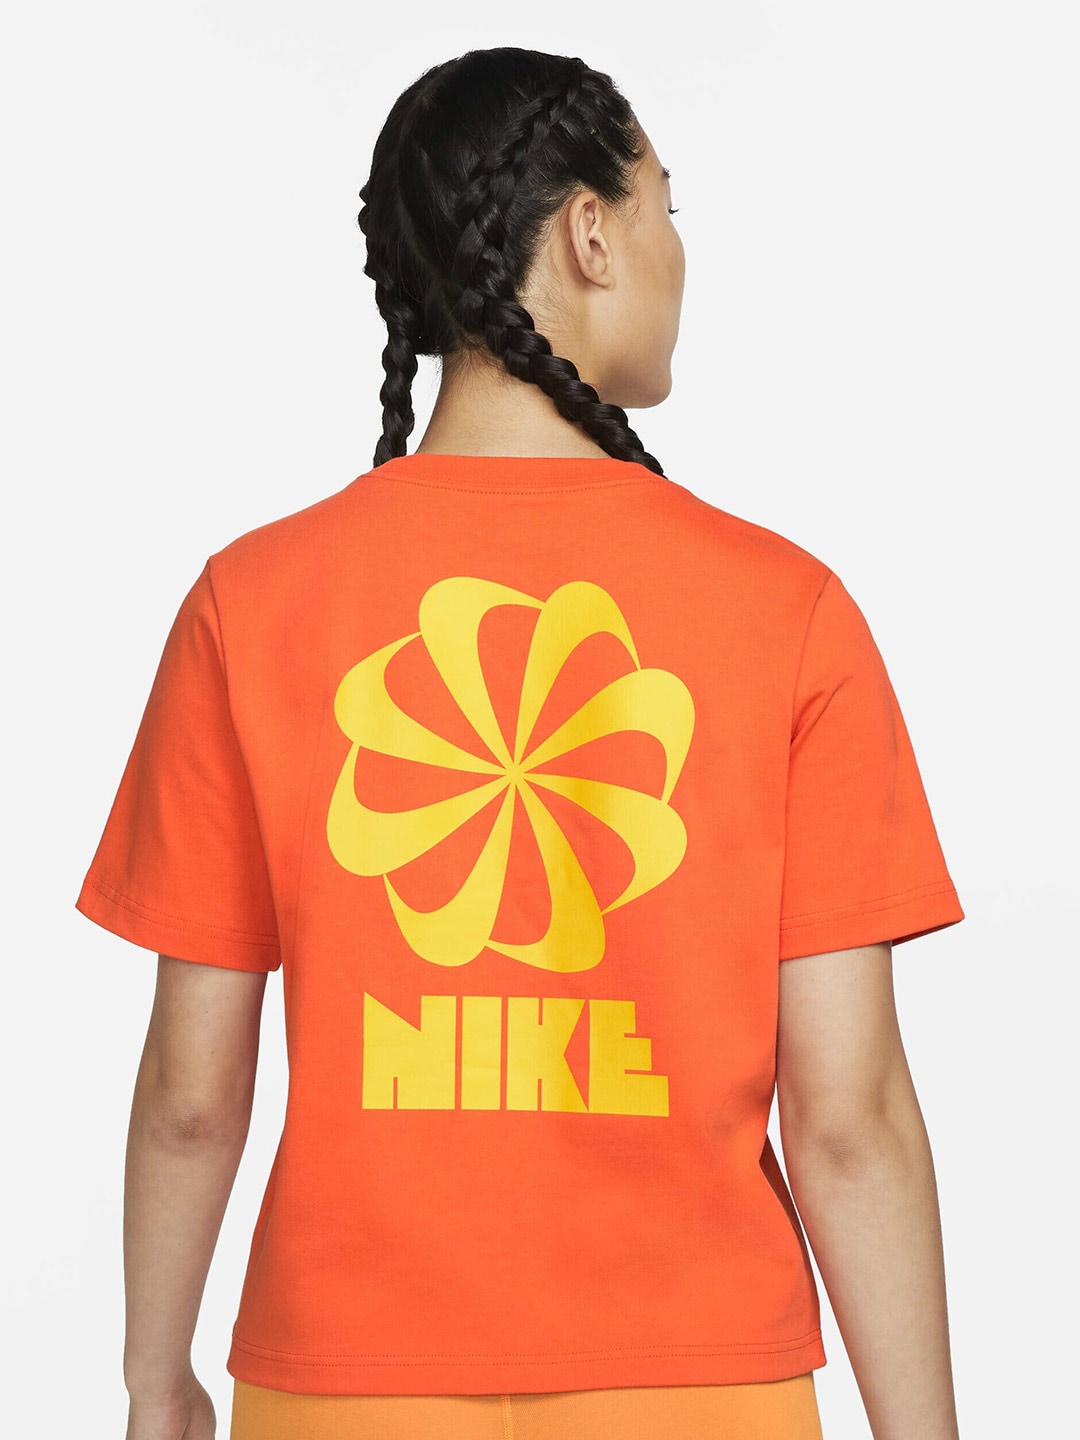 Nike Women Sportswear Circa 72 Cotton Boxy T-Shirt Price in India